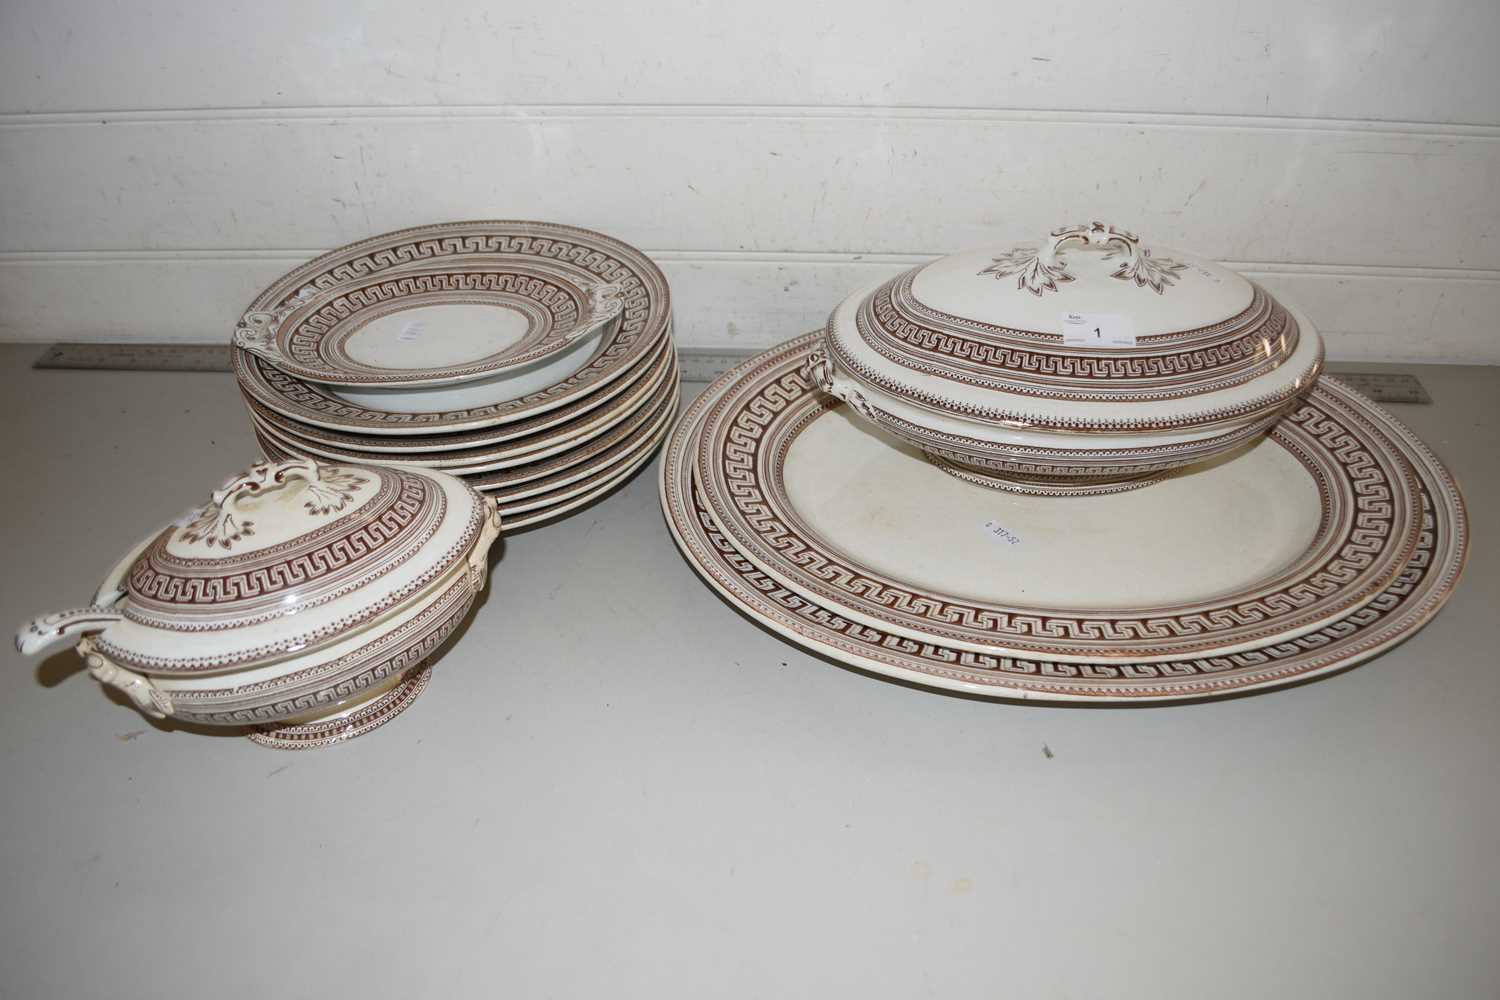 A quantity of Eton pattern dinner wares